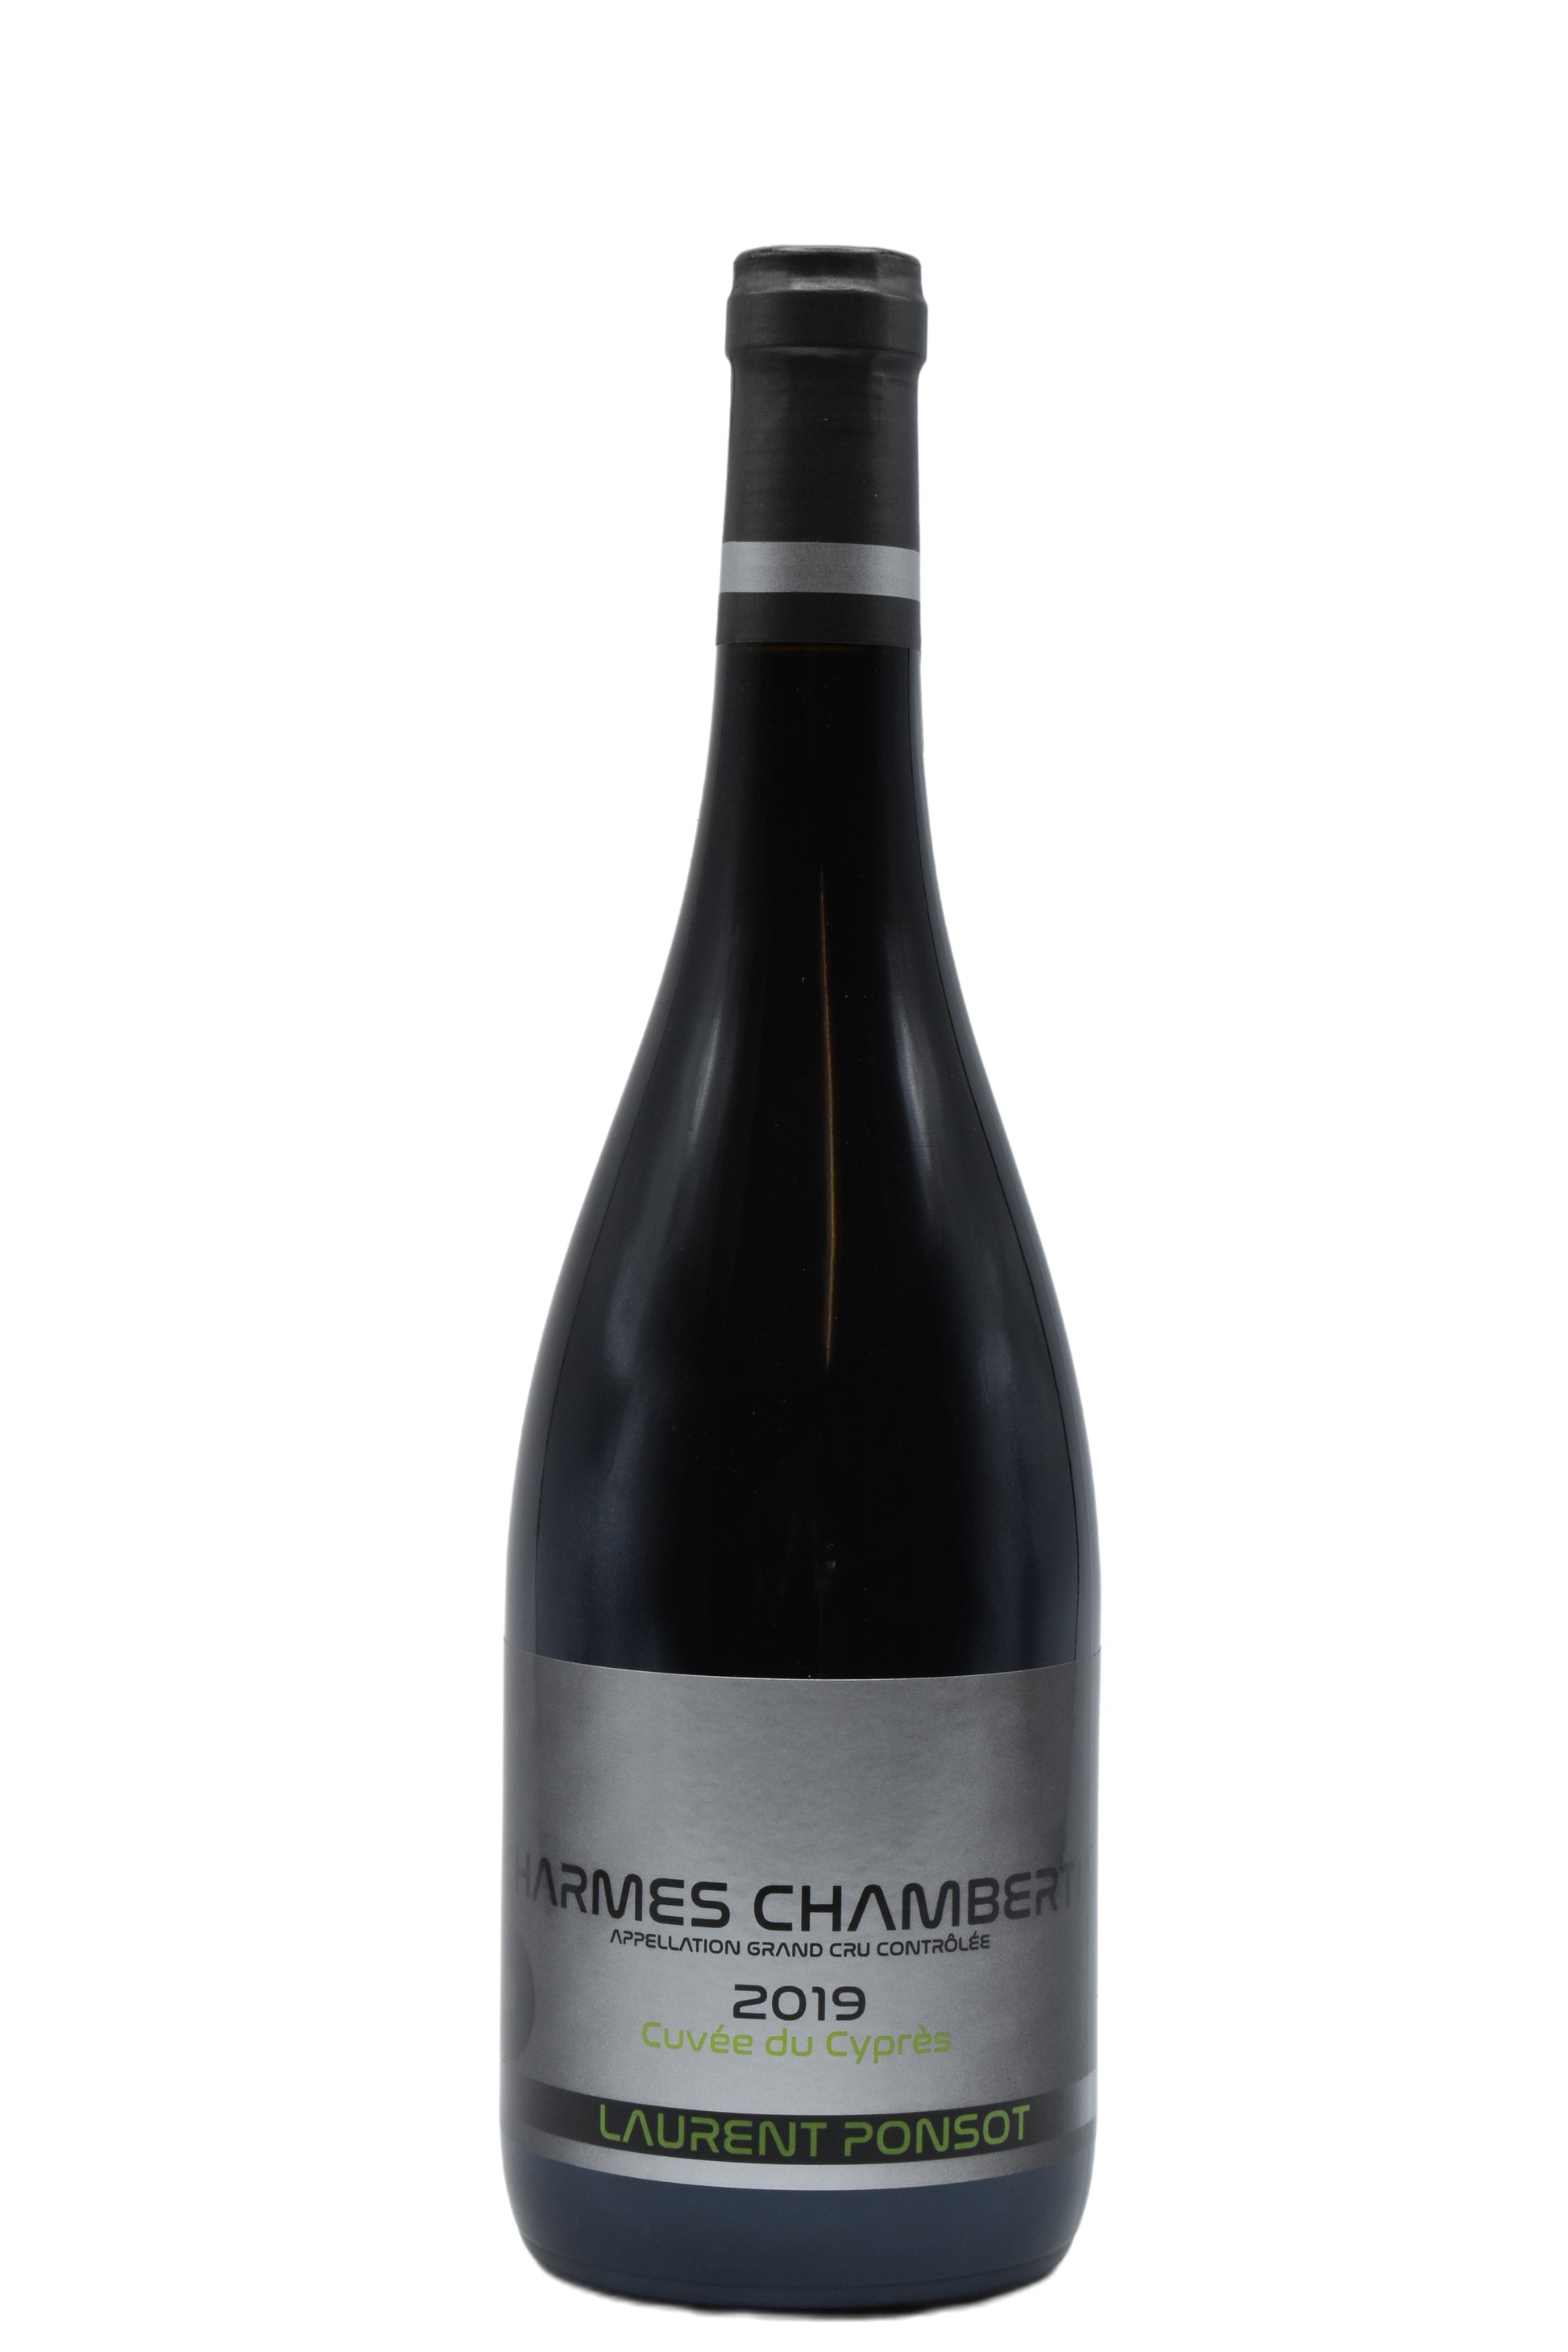 2019 Laurent Ponsot, Charmes Chambertin Cuvee du Cypres Grand Cru 750ml - Walker Wine Co.